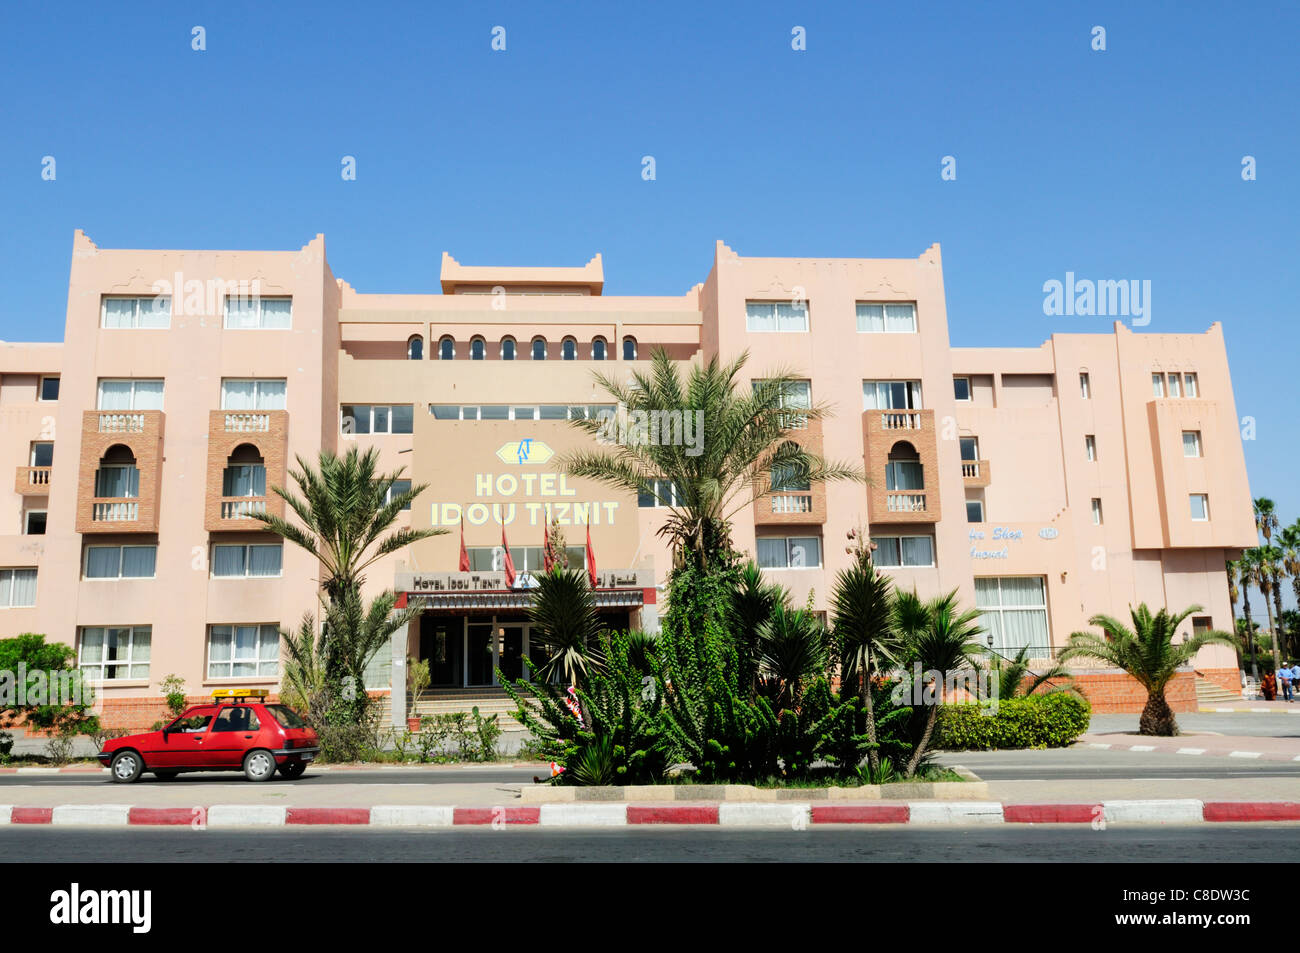 Hotel Idou, Tiznit, Souss-Massa-Draa Region, Morocco Stock Photo